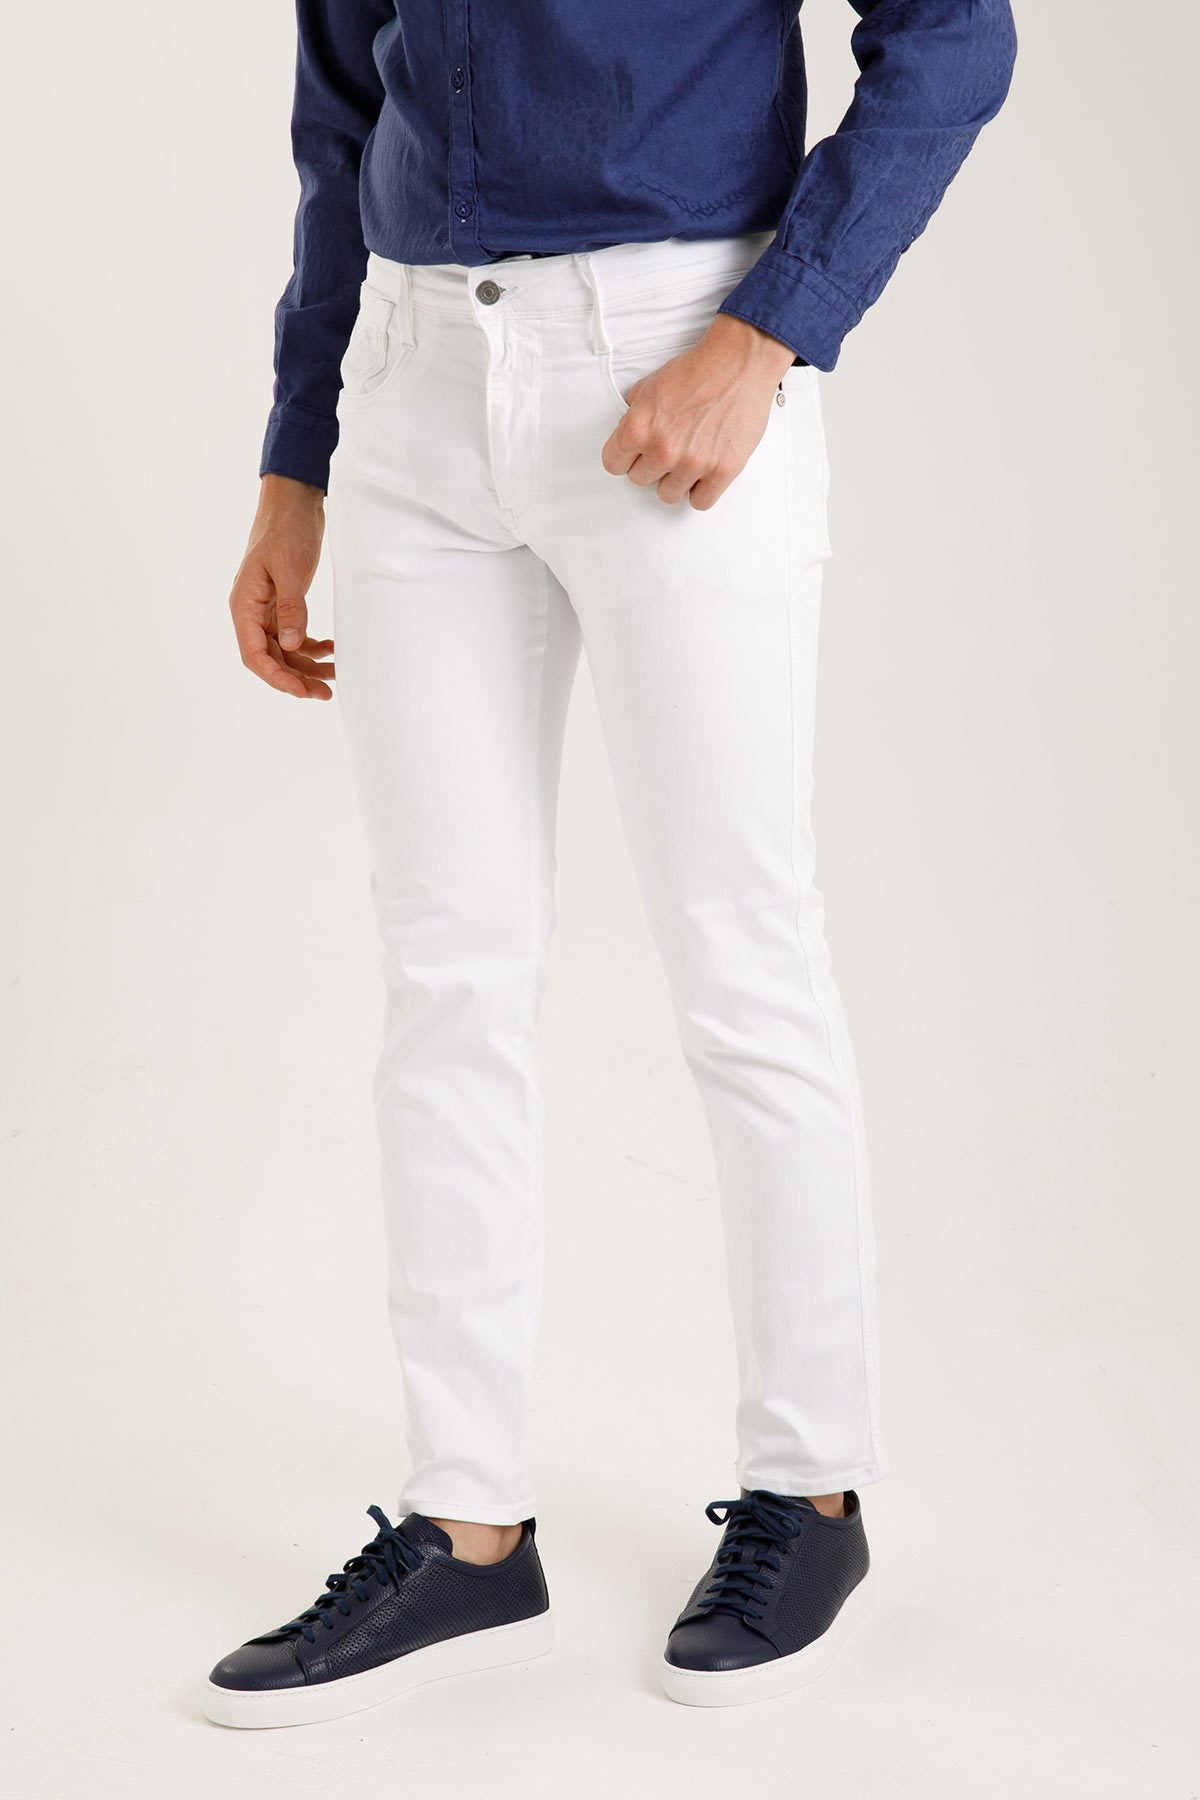 Replay Hyperflex Color Edition X-Lite Anbass Slim Fit Jeans-Libas Trendy Fashion Store